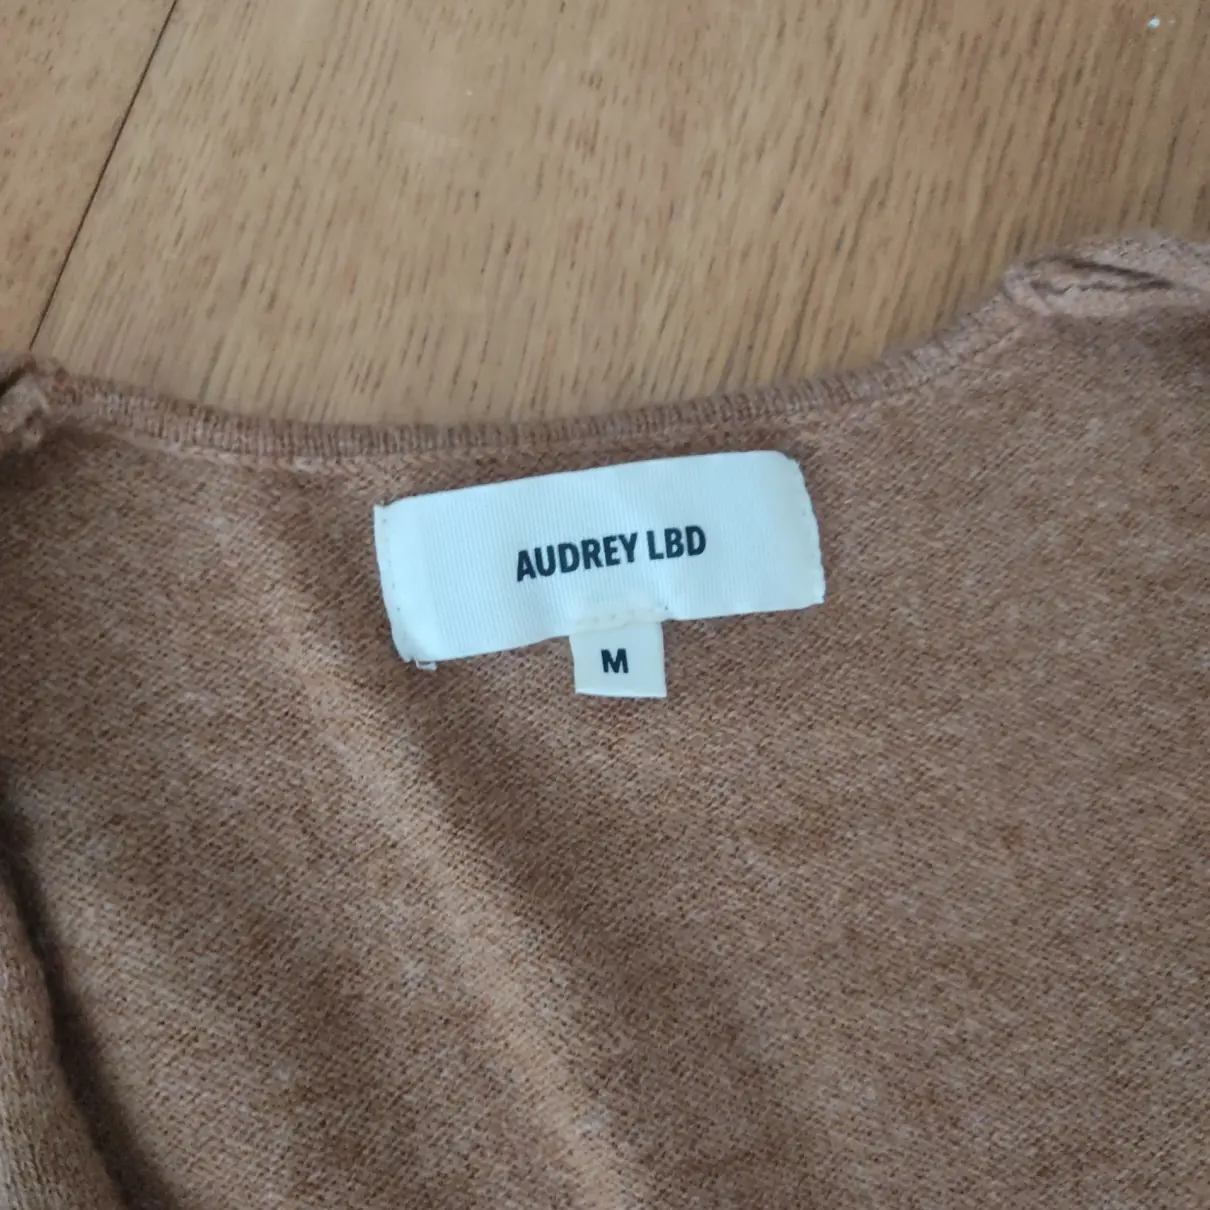 Buy Audrey LBD Wool jumper online